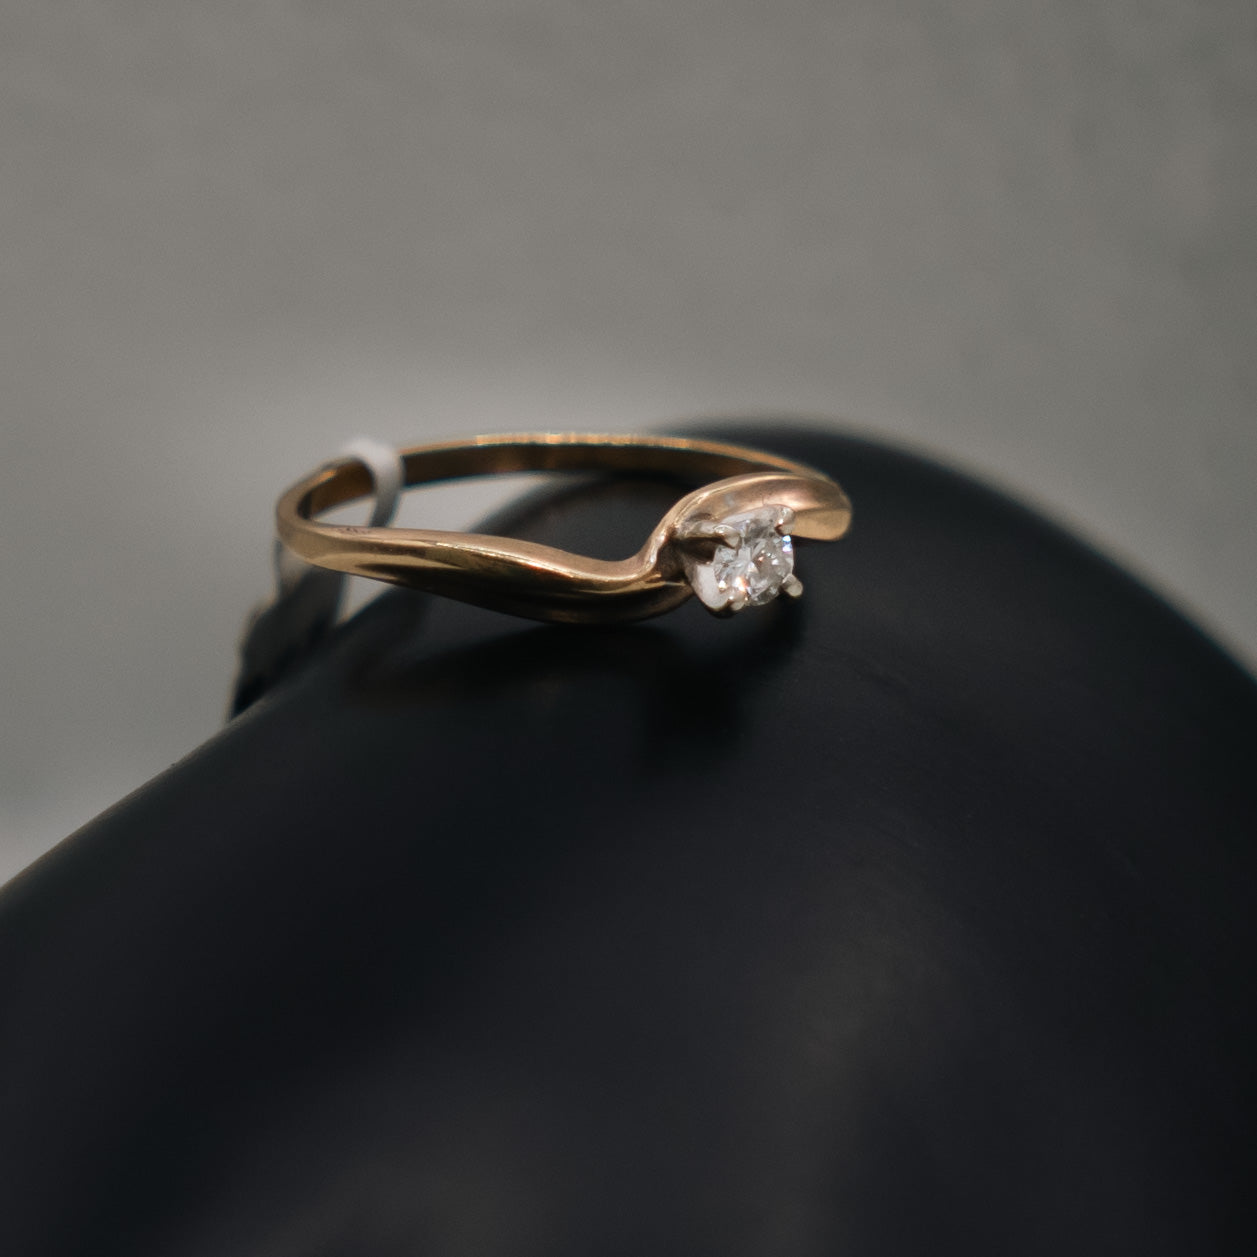 Single Diamond Engagement Ring 14K Yellow Gold / 1.5gr / Size 6